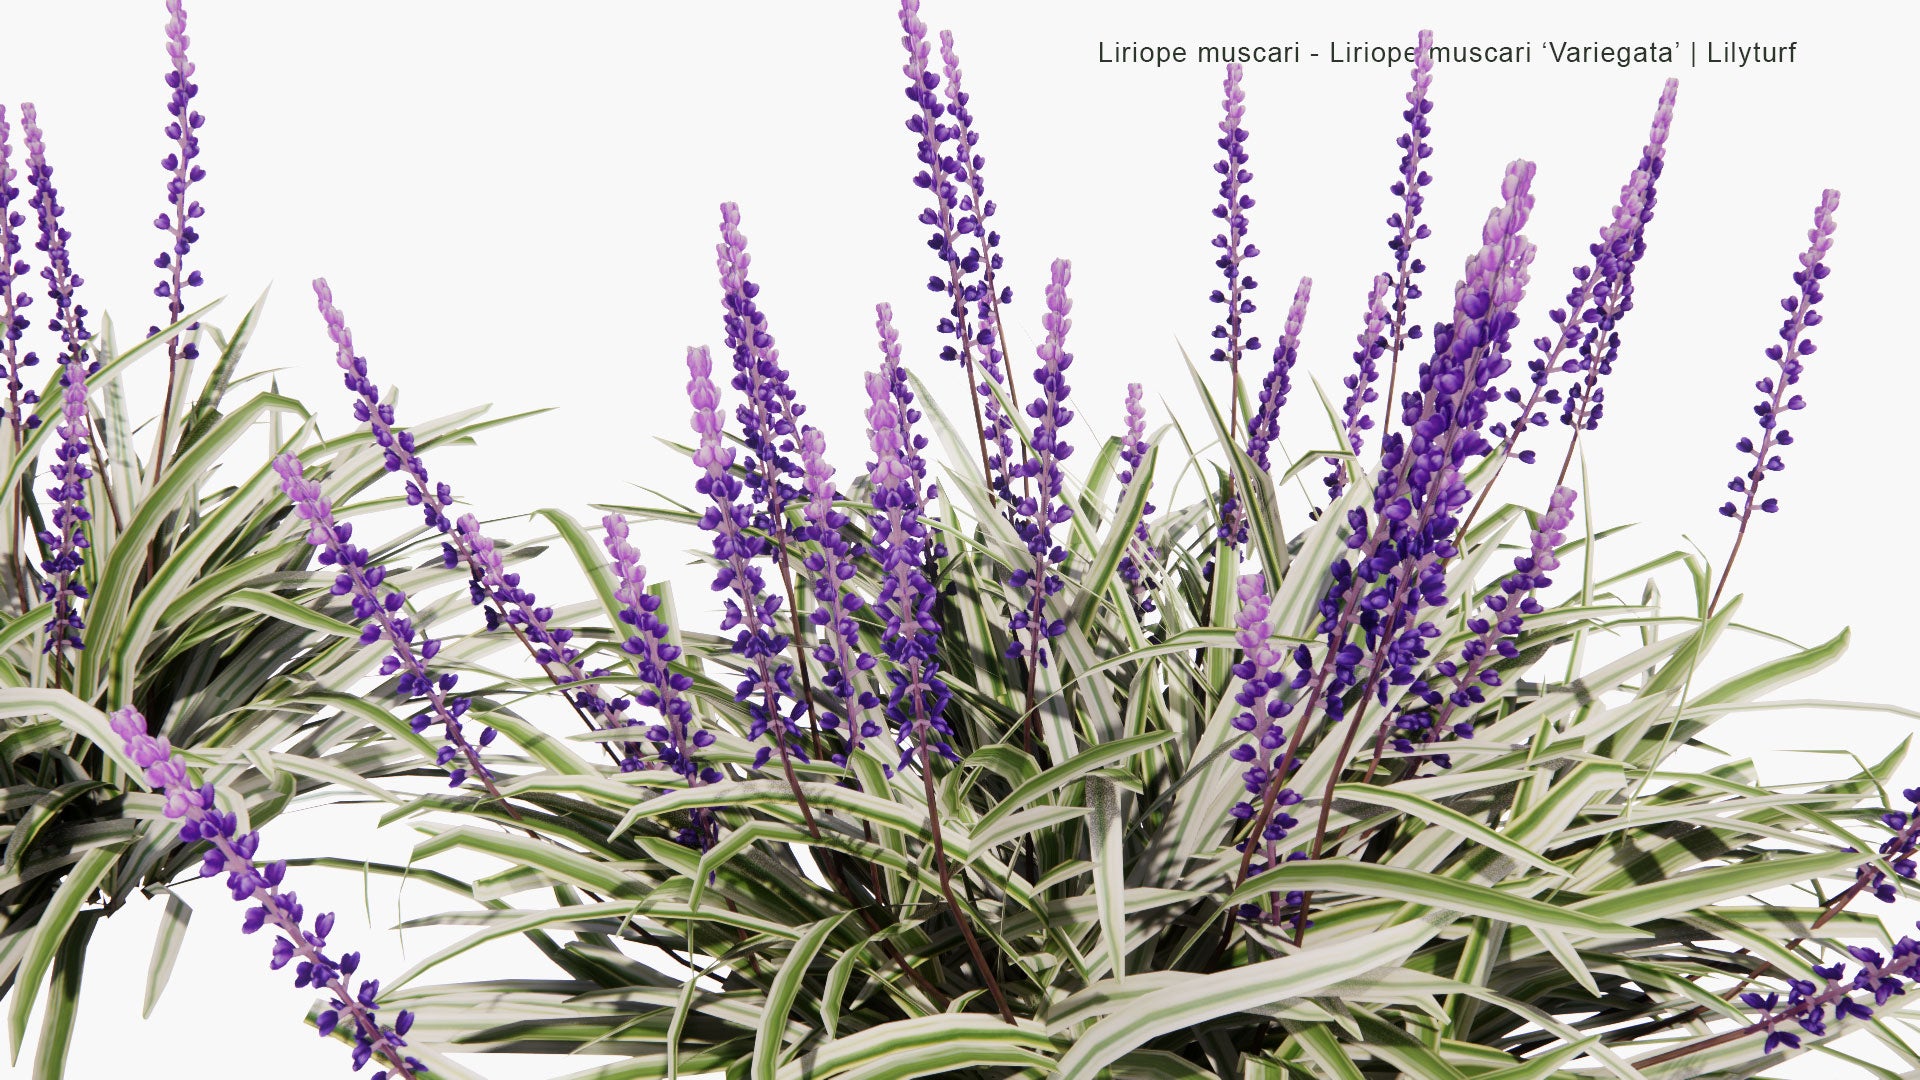 Low Poly Liriope Muscari, Liriope Muscari 'Variegata' - Big Blue Lilyturf, Lilyturf, Border Grass, Monkey Grass (3D Model)